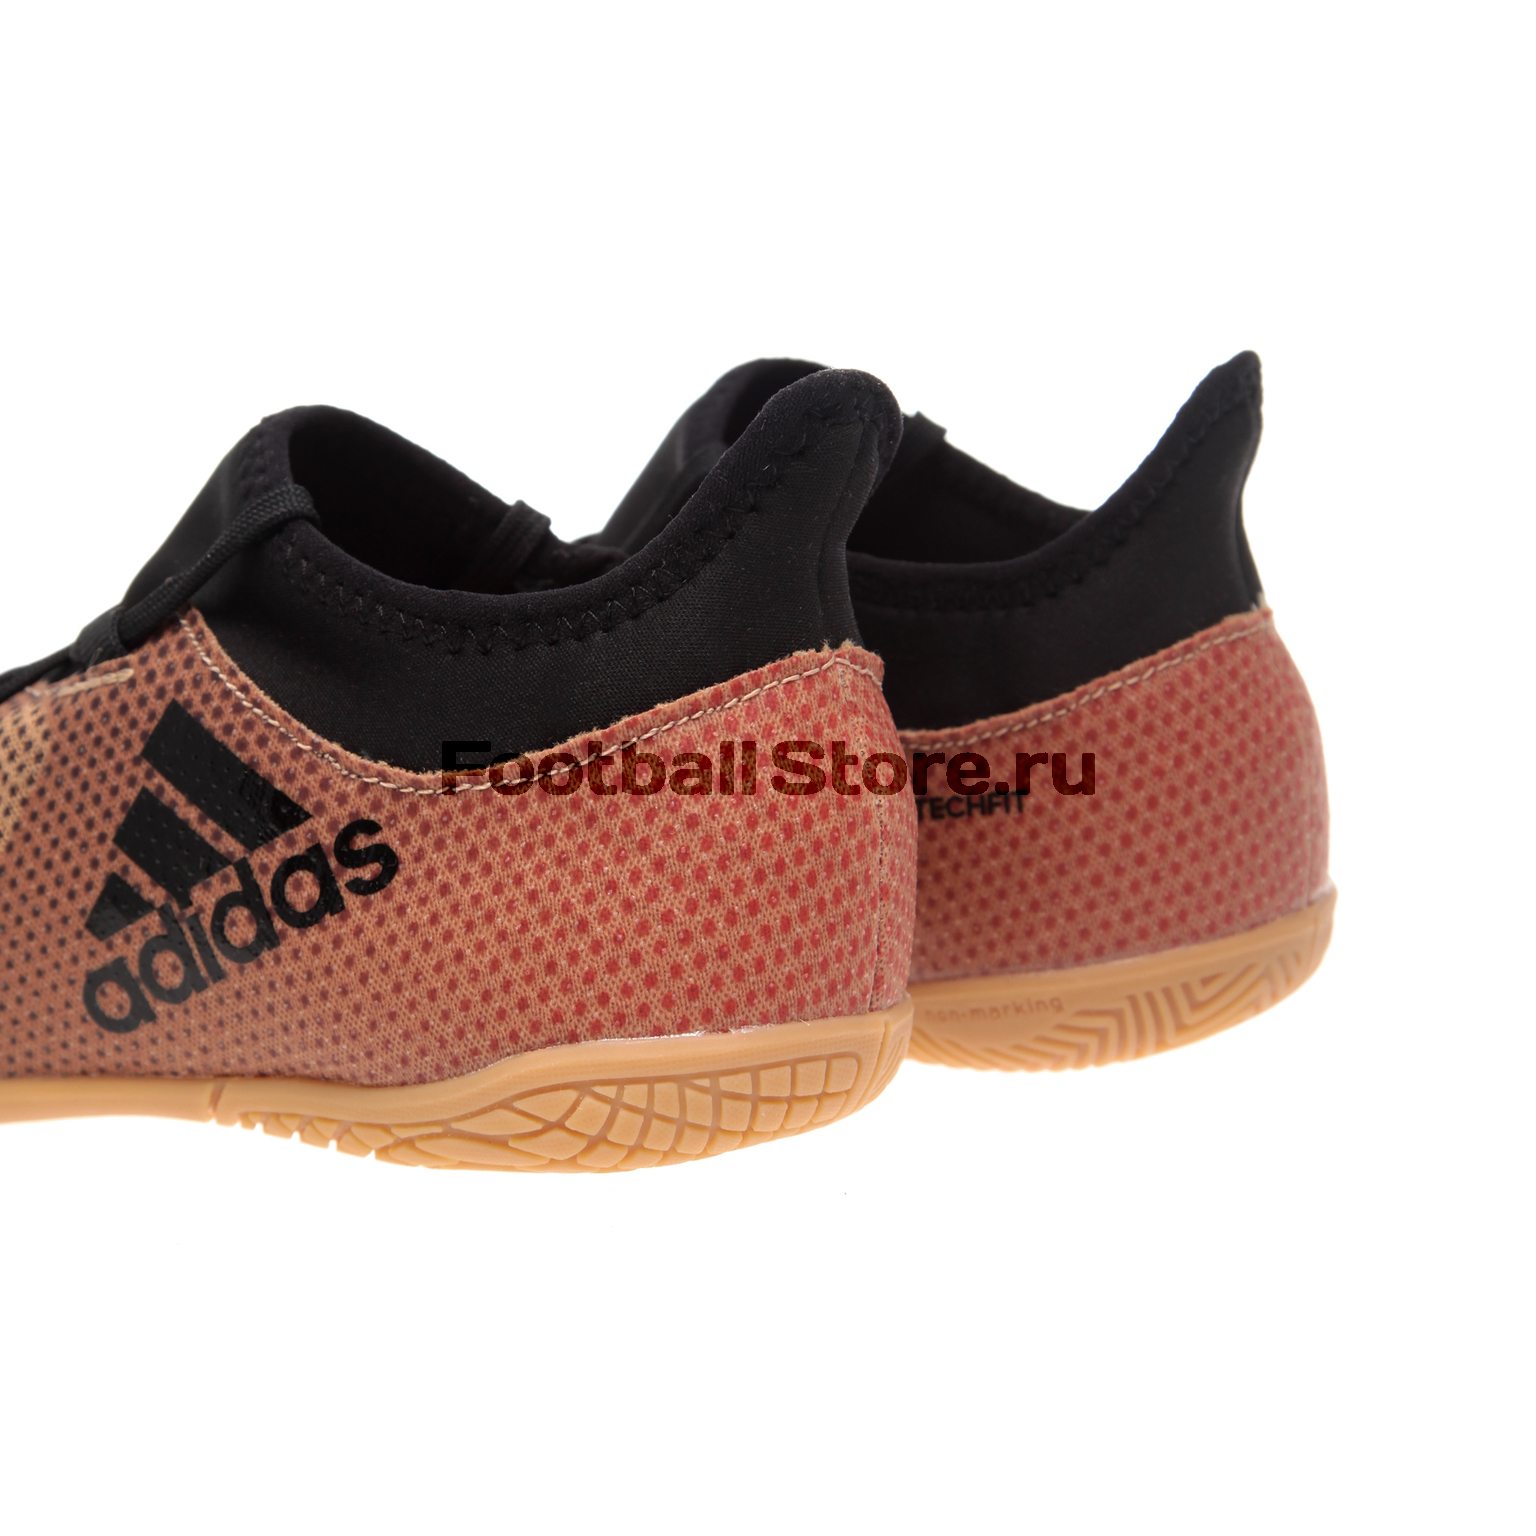 Футзалки детские Adidas X Tango 17.3 IN CP9033